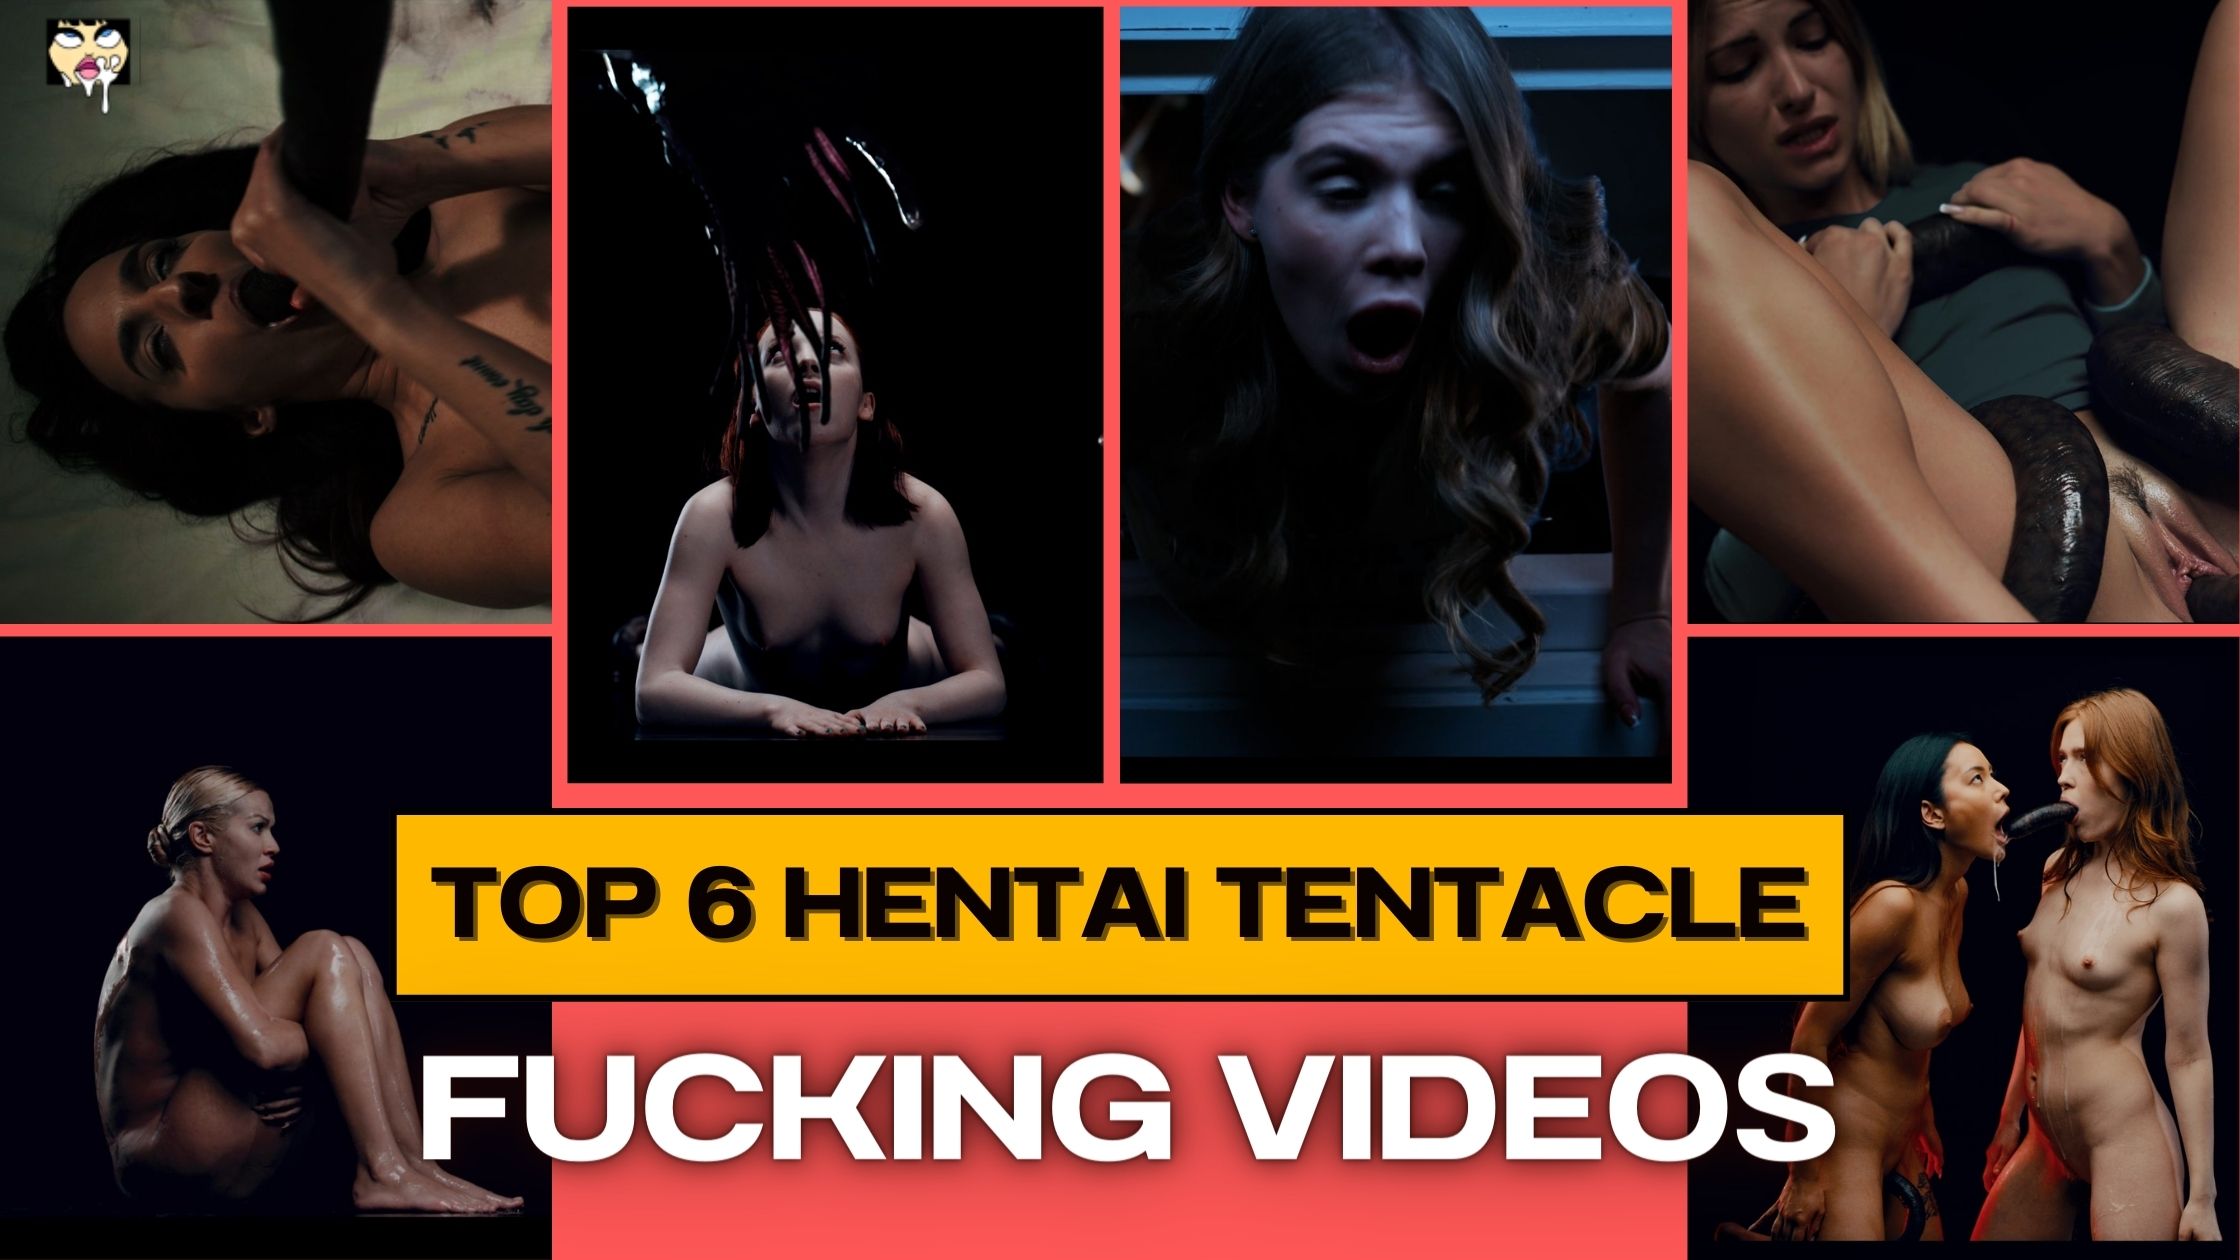 Top 6 Hentai Tentacle Fucking Videos